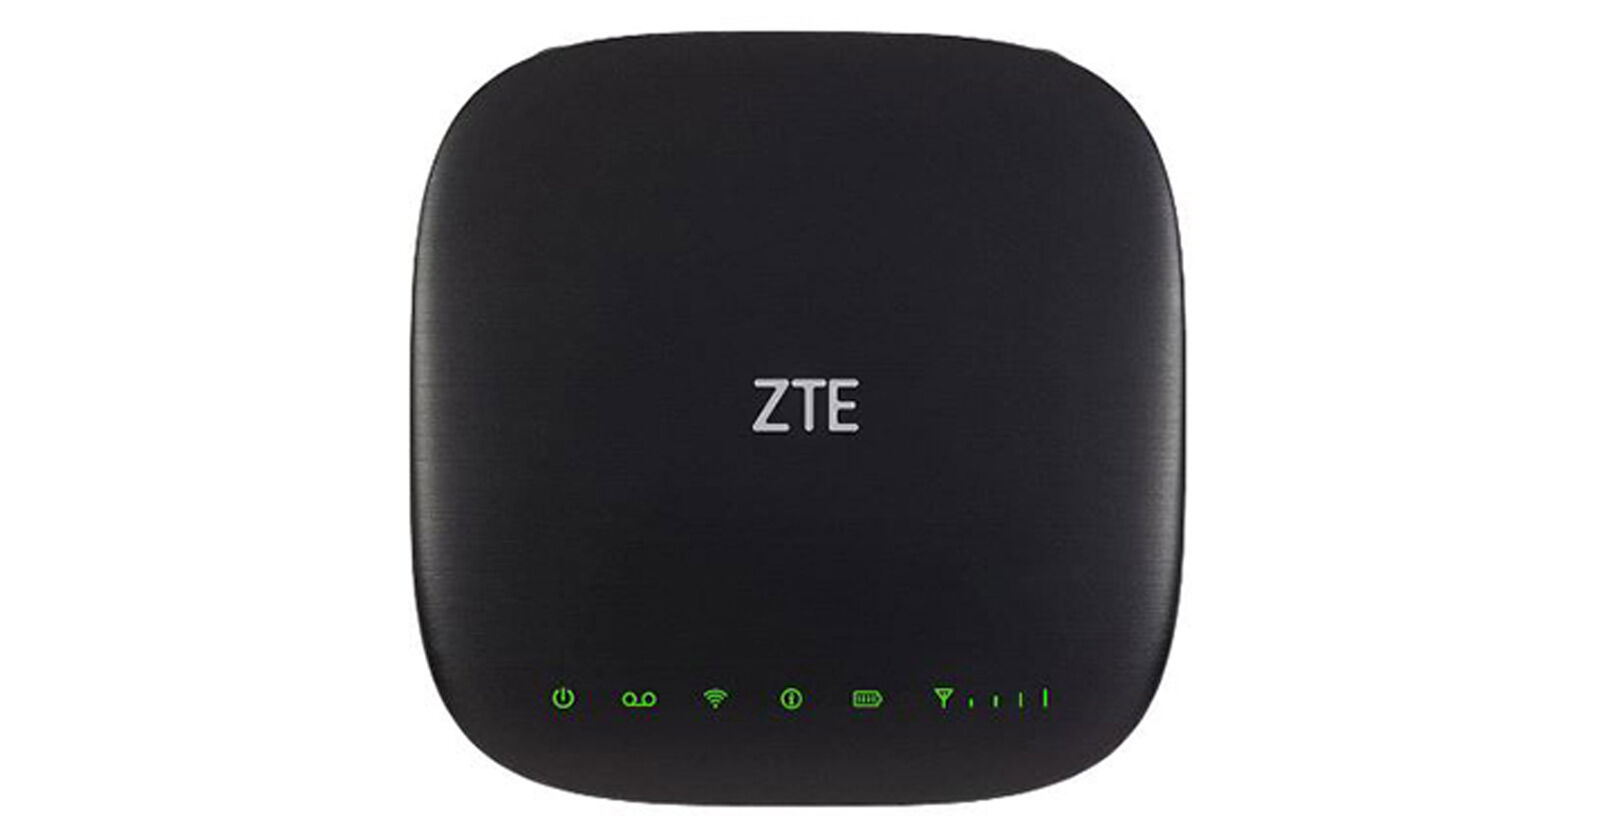 ZTE MF279T Home Wireless Router Black (Telus + GSM Unlocked) - Excellent